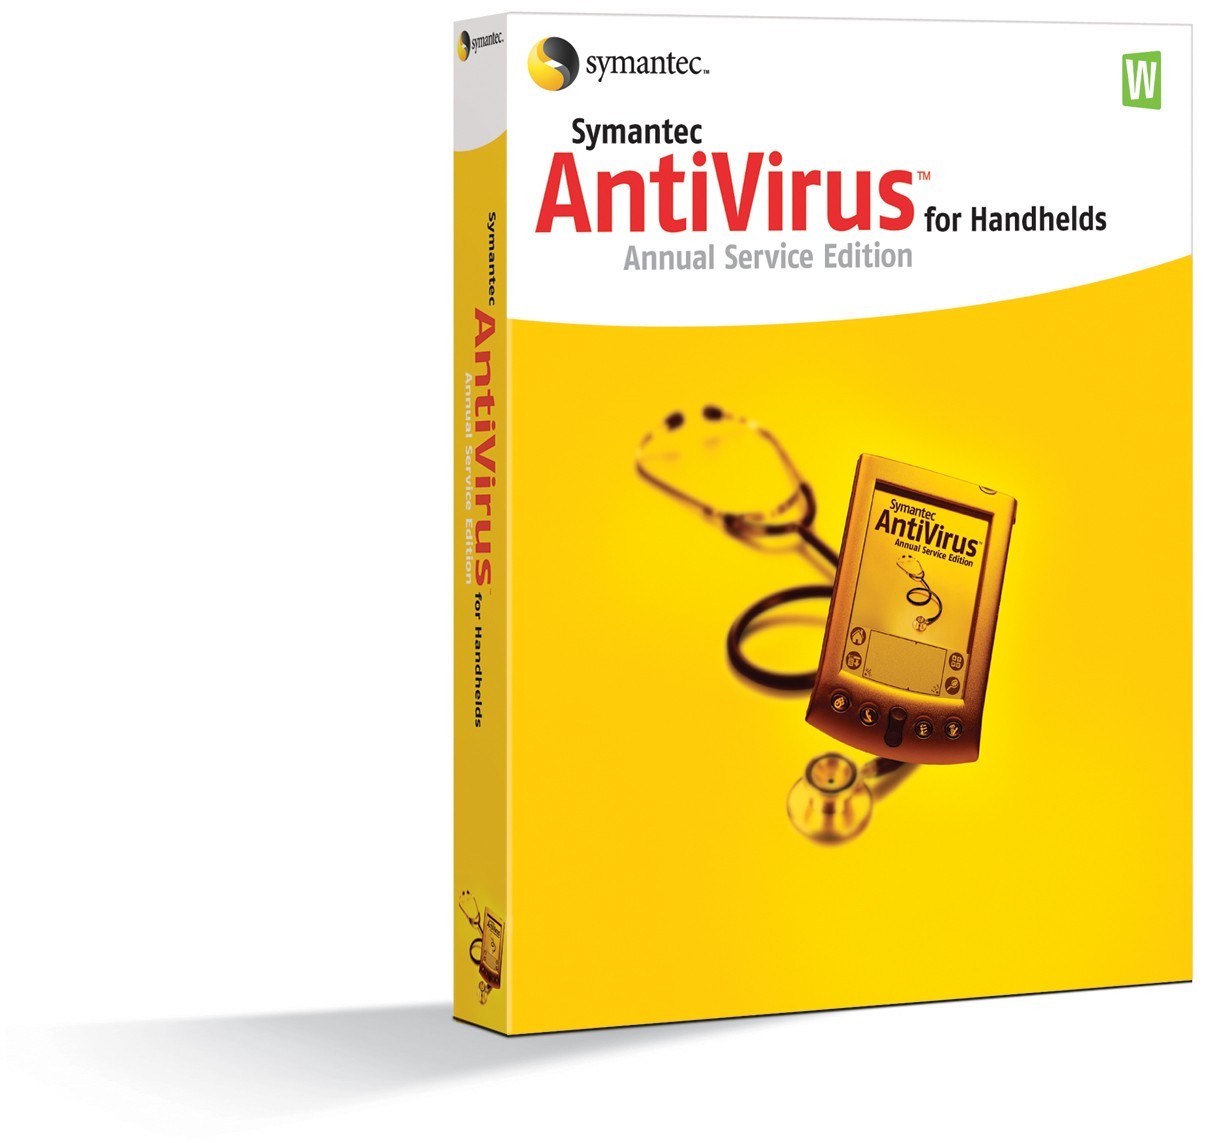 Symantec AntiVirus for Handhelds Annual Service Edition 2004